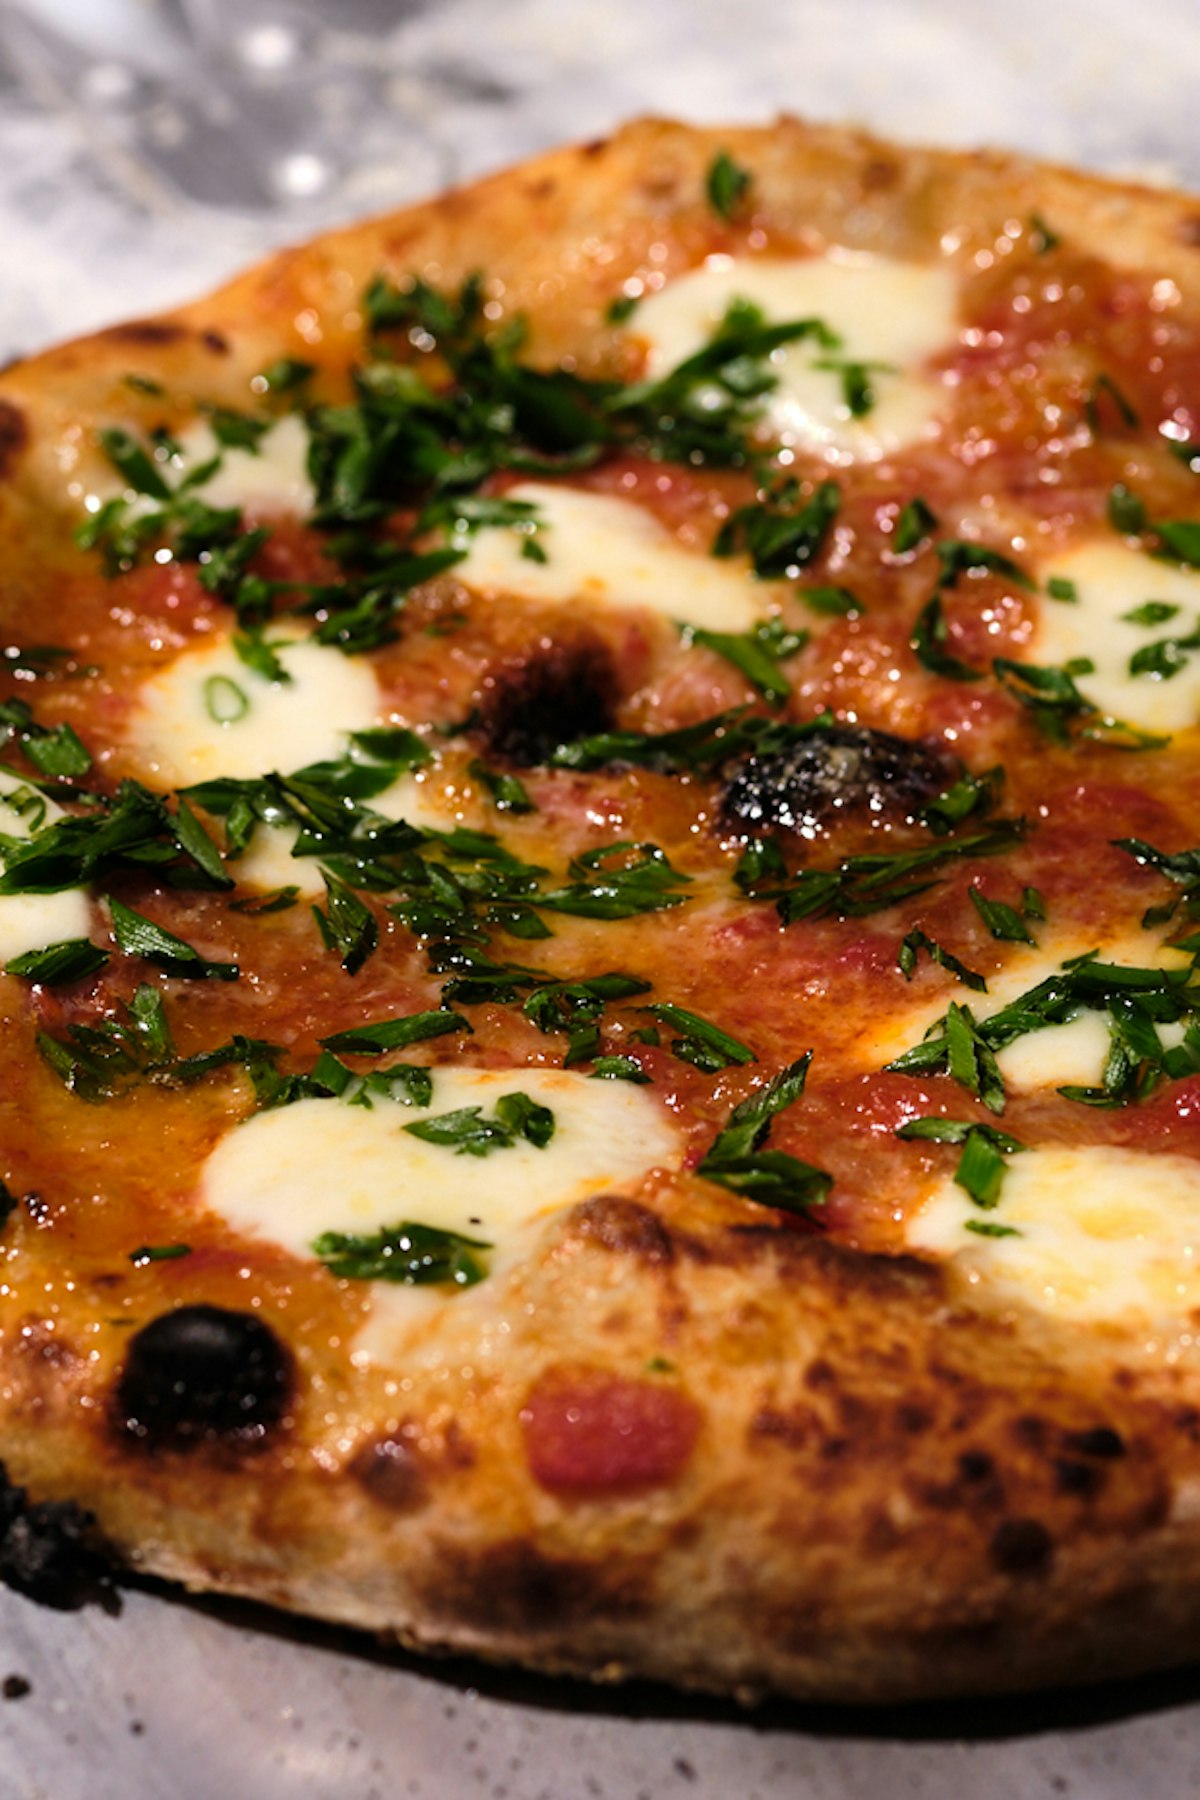 The Best Pizza Making Surfaces - Santa Barbara Baker